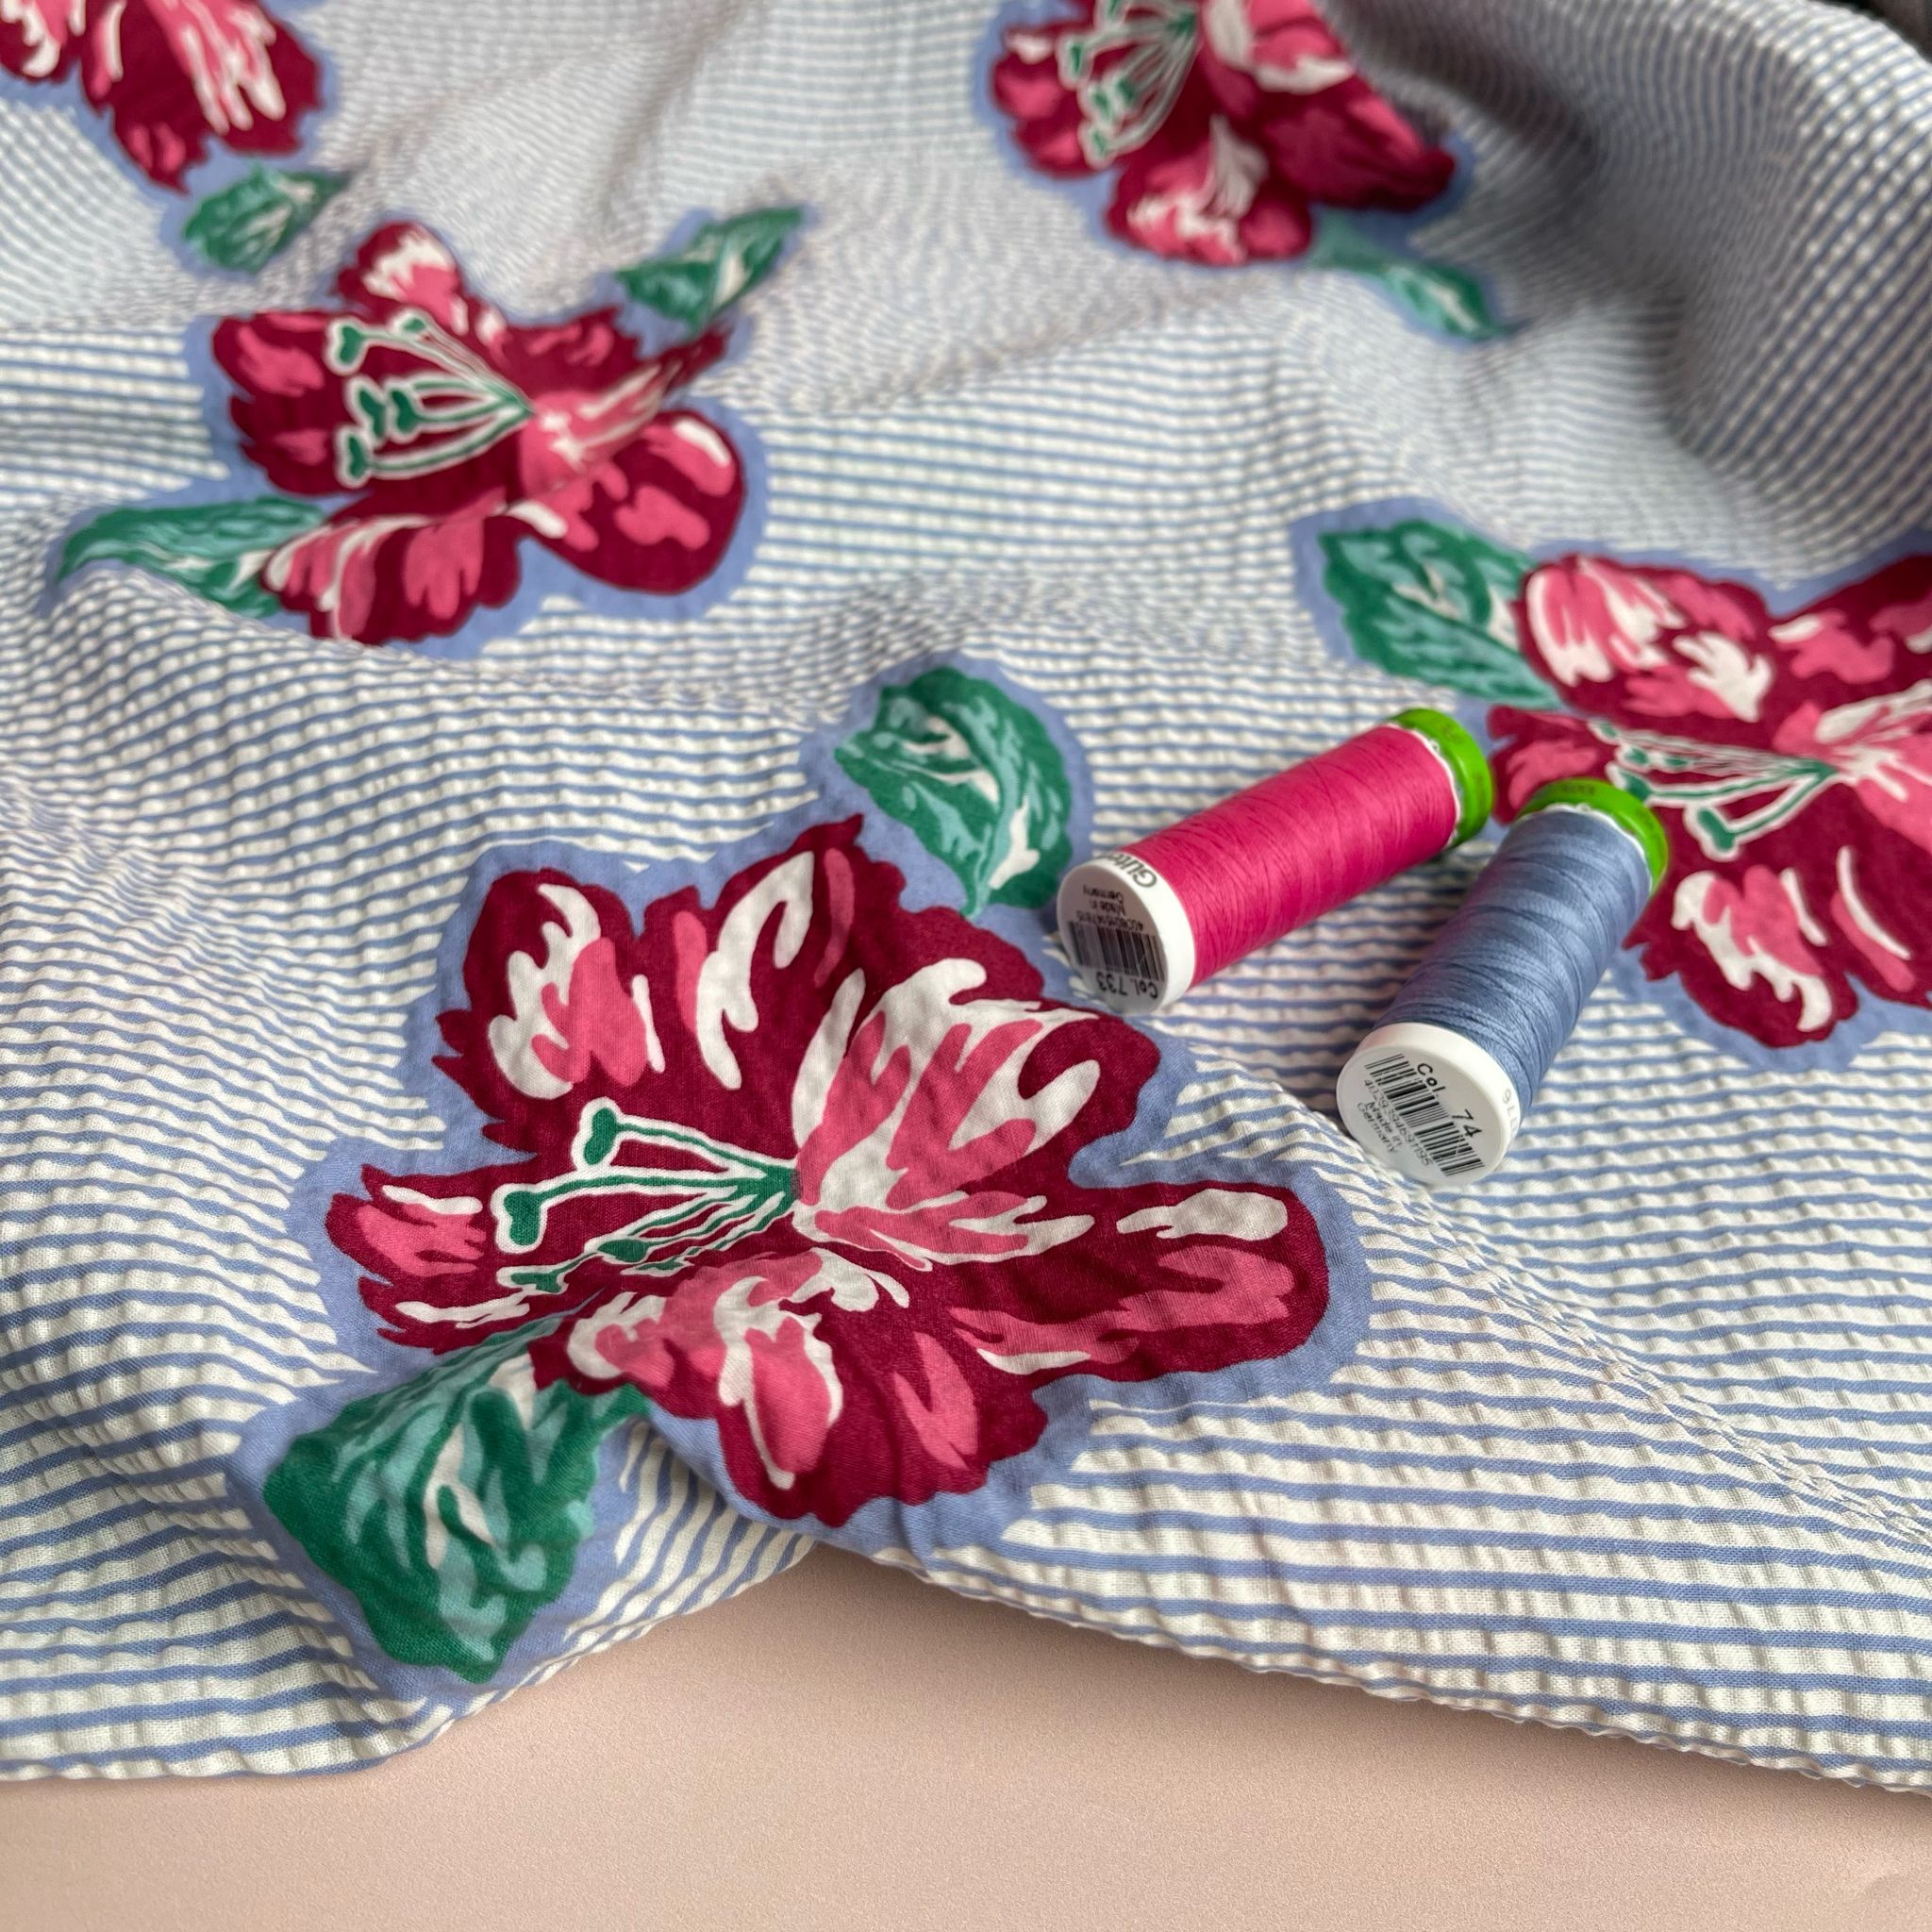 REMNANT 1.67 Metres - Ex-Designer Deadstock Floral Stripes Cotton Seersucker Fabric